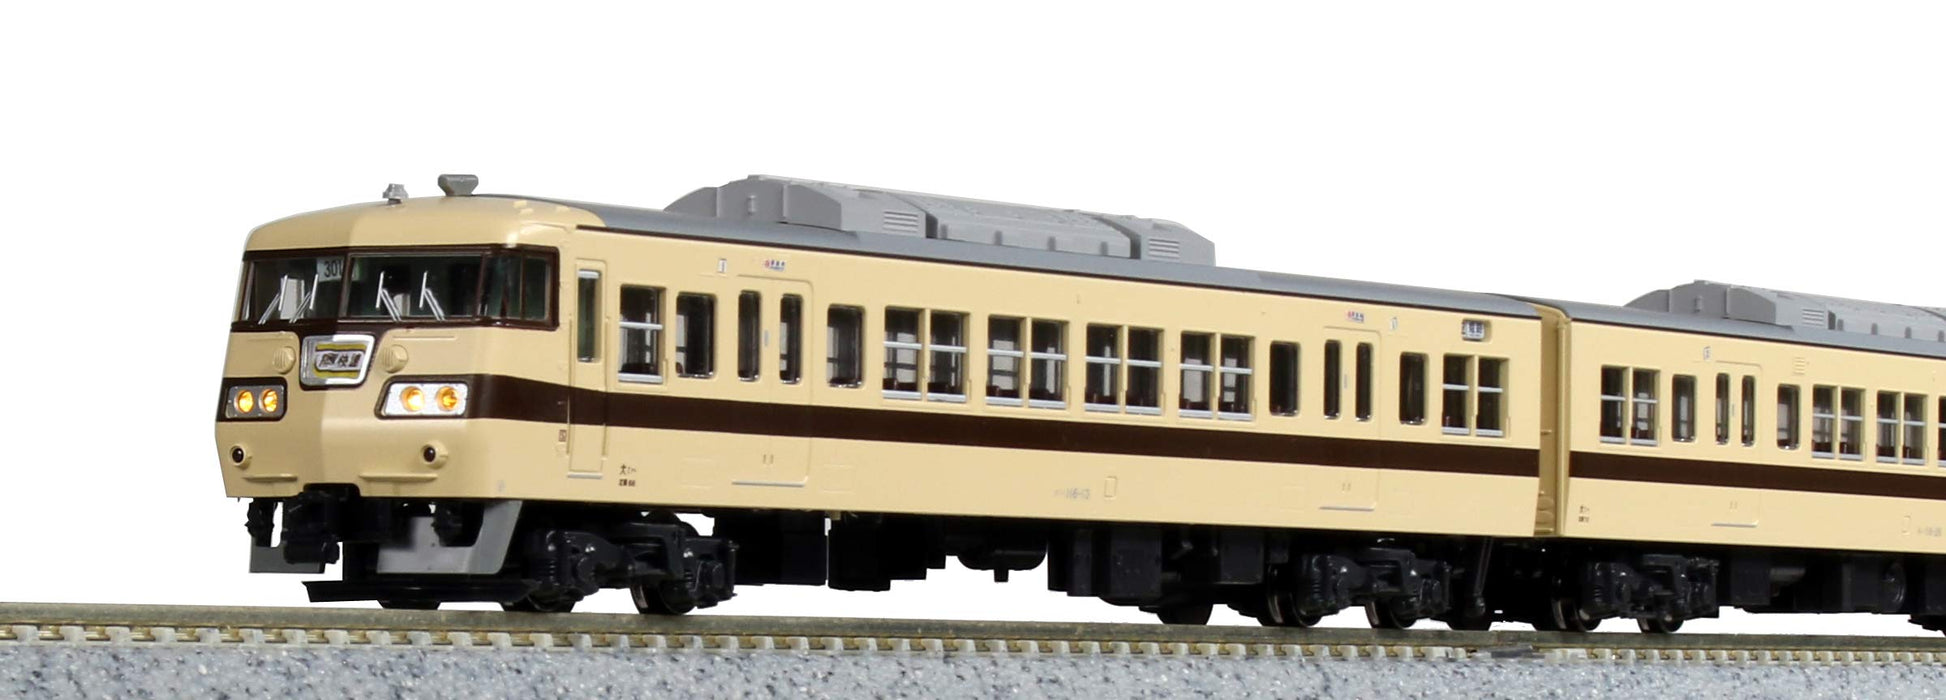 Kato N Gauge Railway Model Train - 117 Series New Rapid 6-Car Set 10-1607